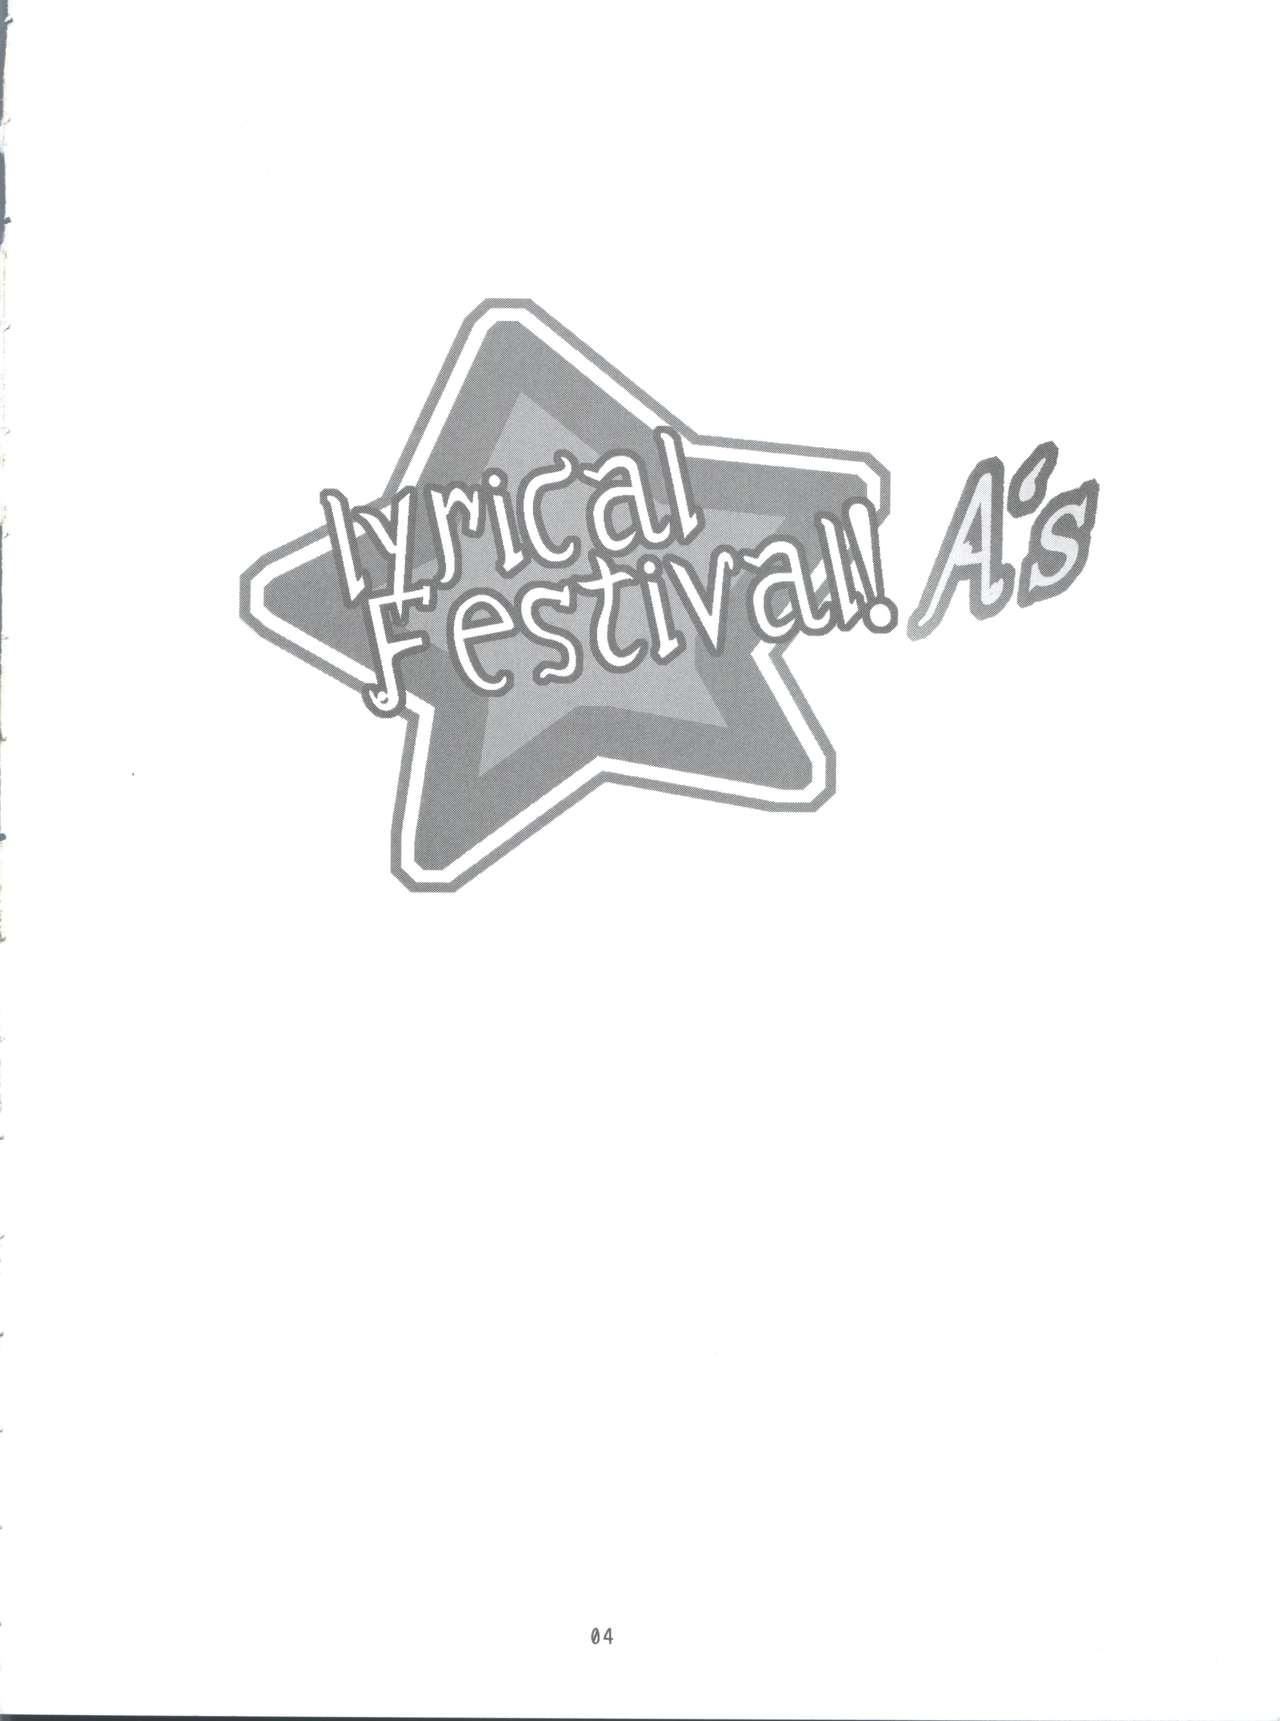 Lyrical Festival! A's 2